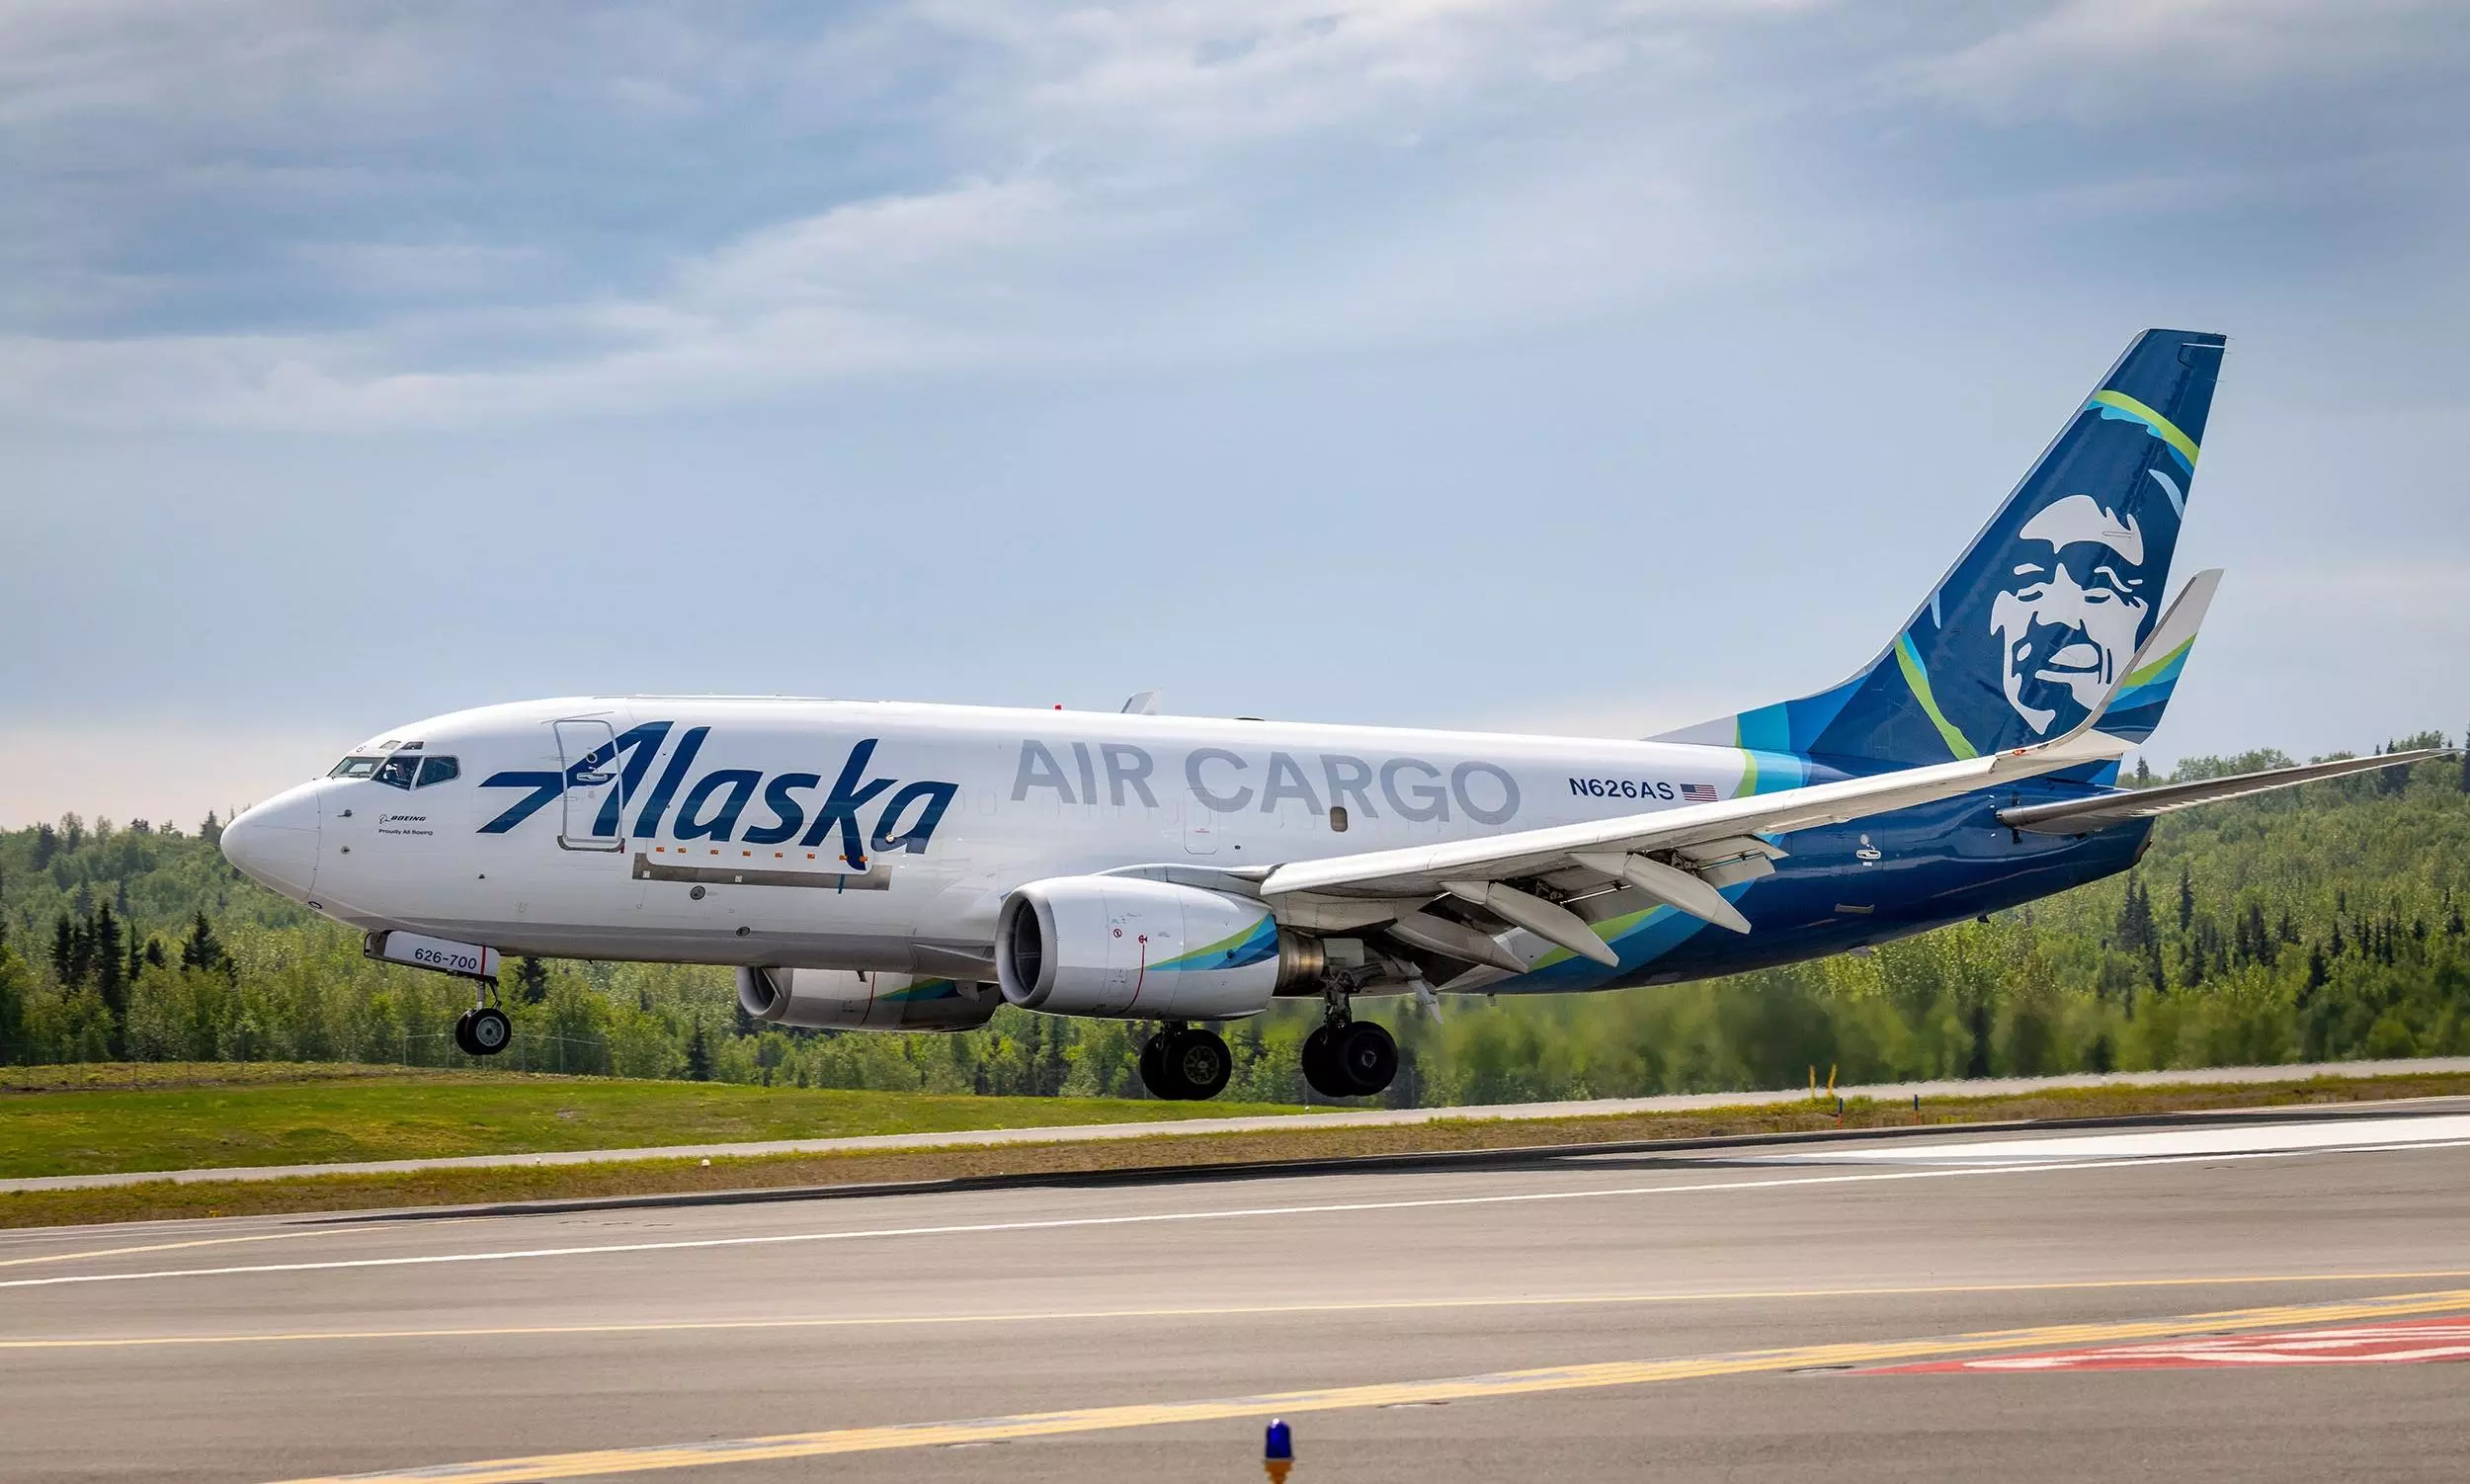 IBS Softwares iCargo to digitally transform Alaska Air Cargos biz